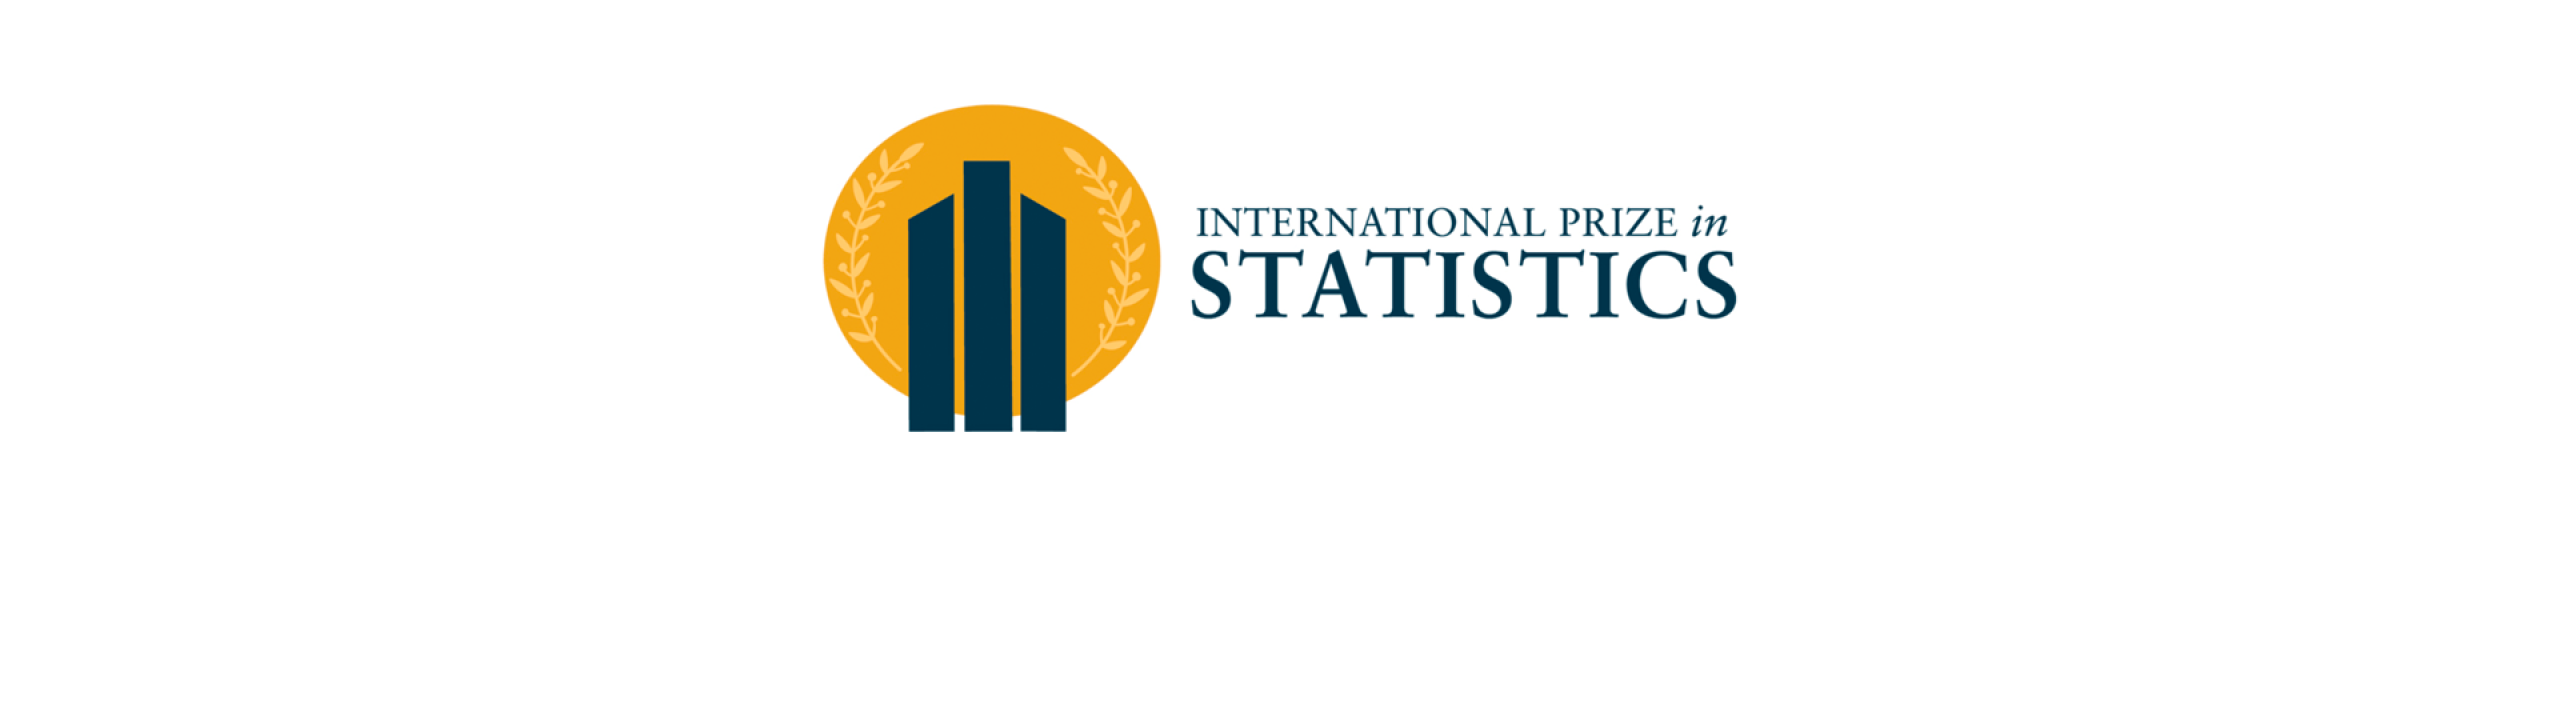 international-prize-in-statistics